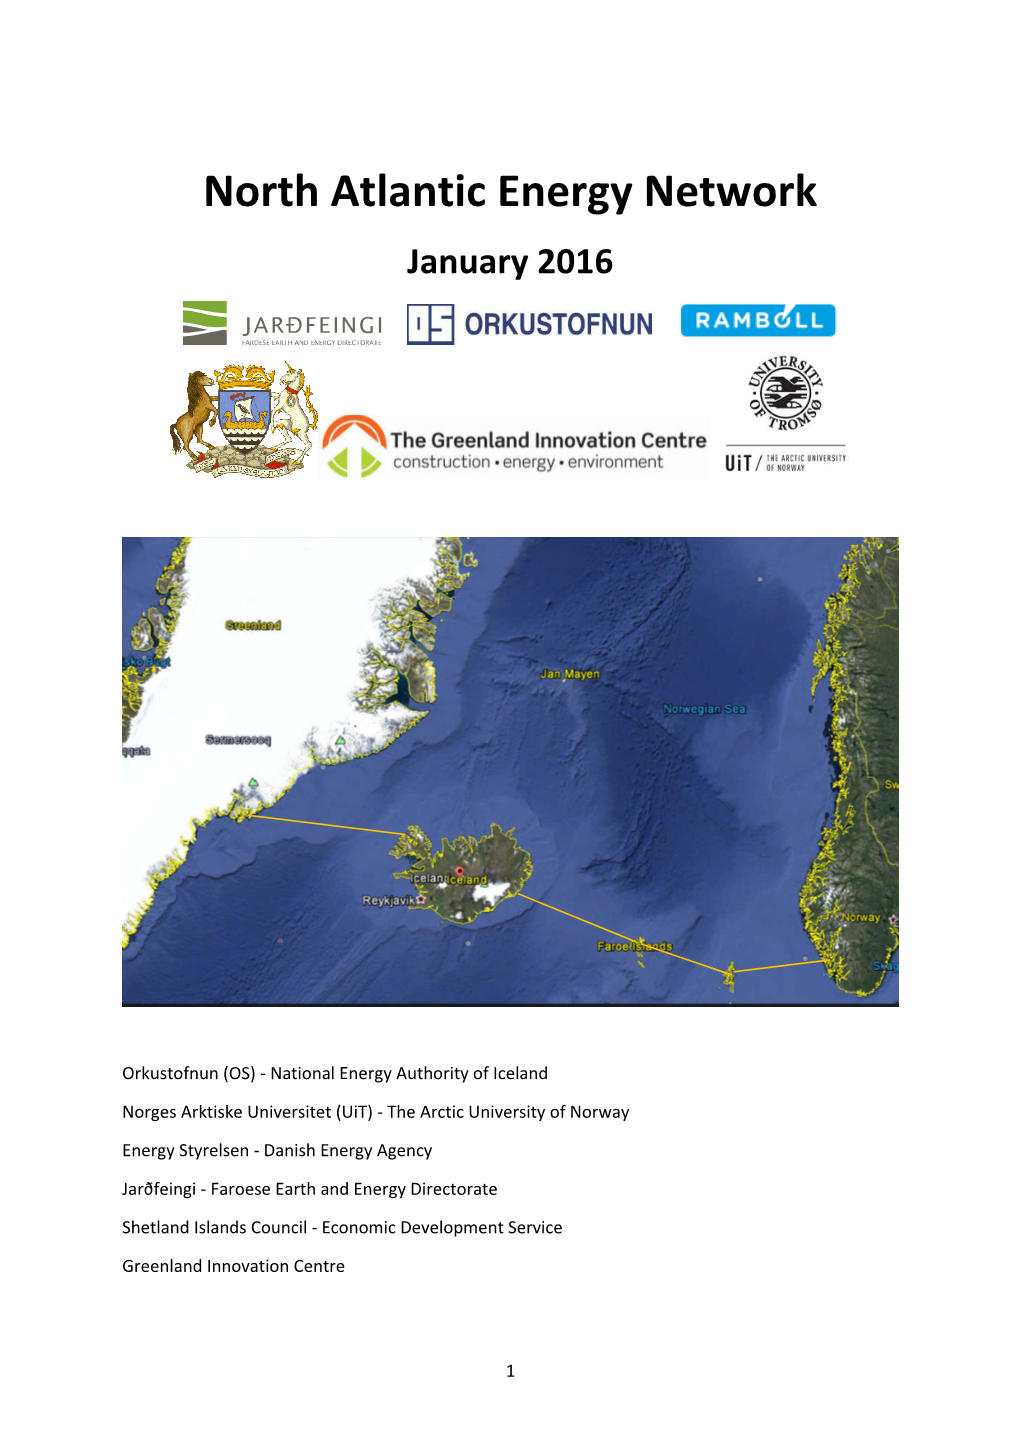 North Atlantic Energy Network January 2016